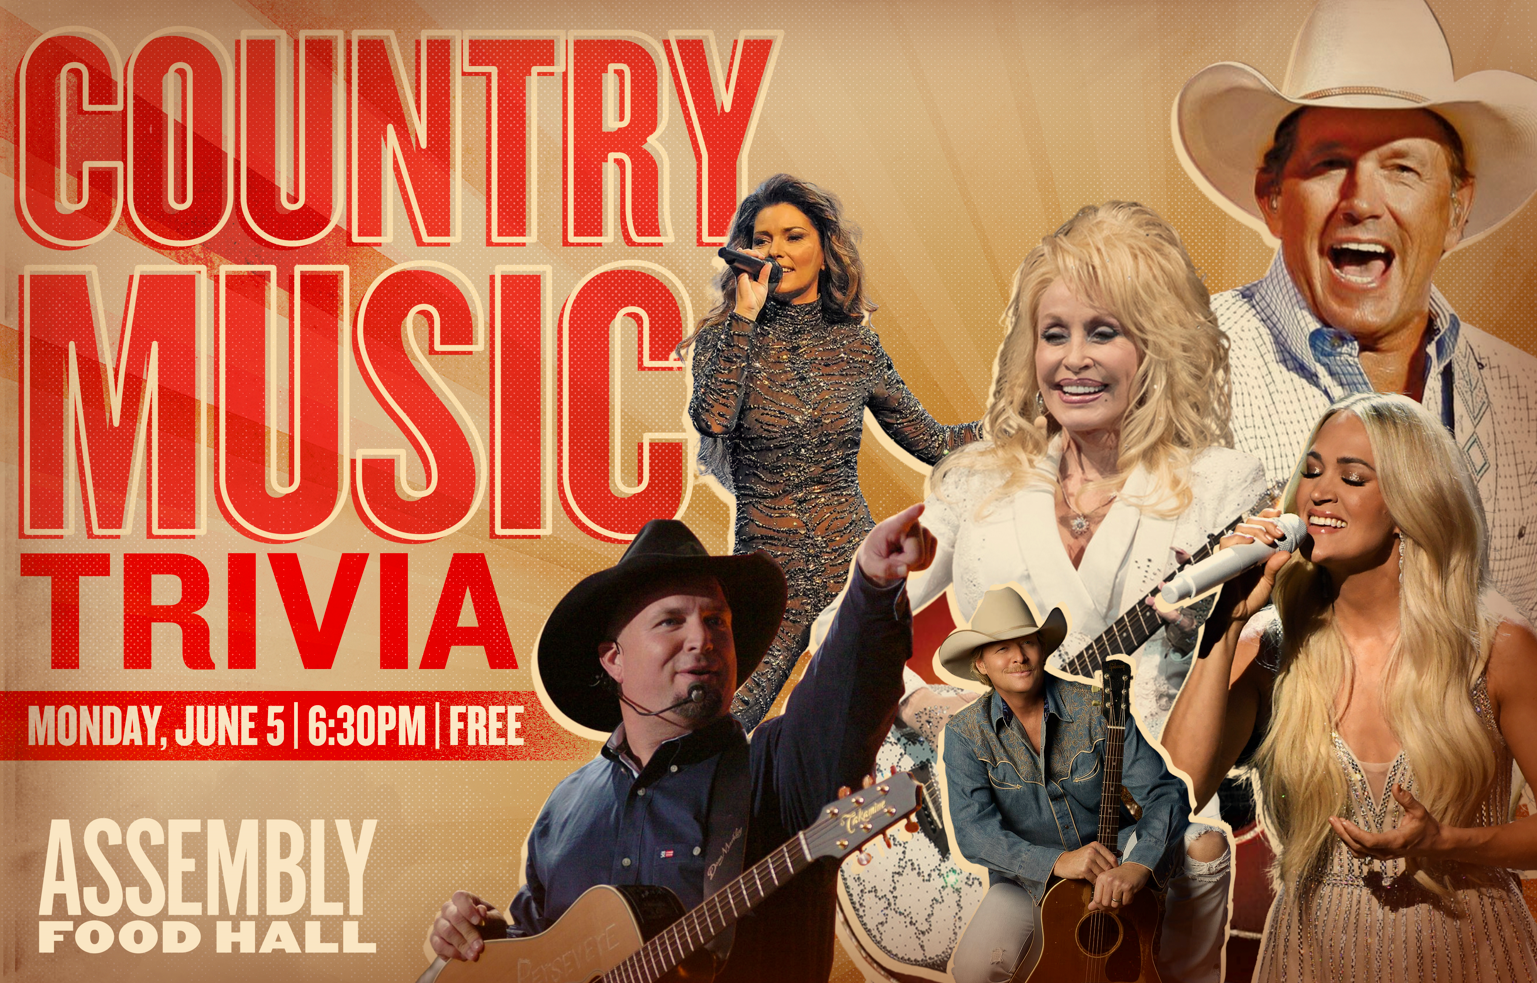 Promo image of Country Music Trivia Night